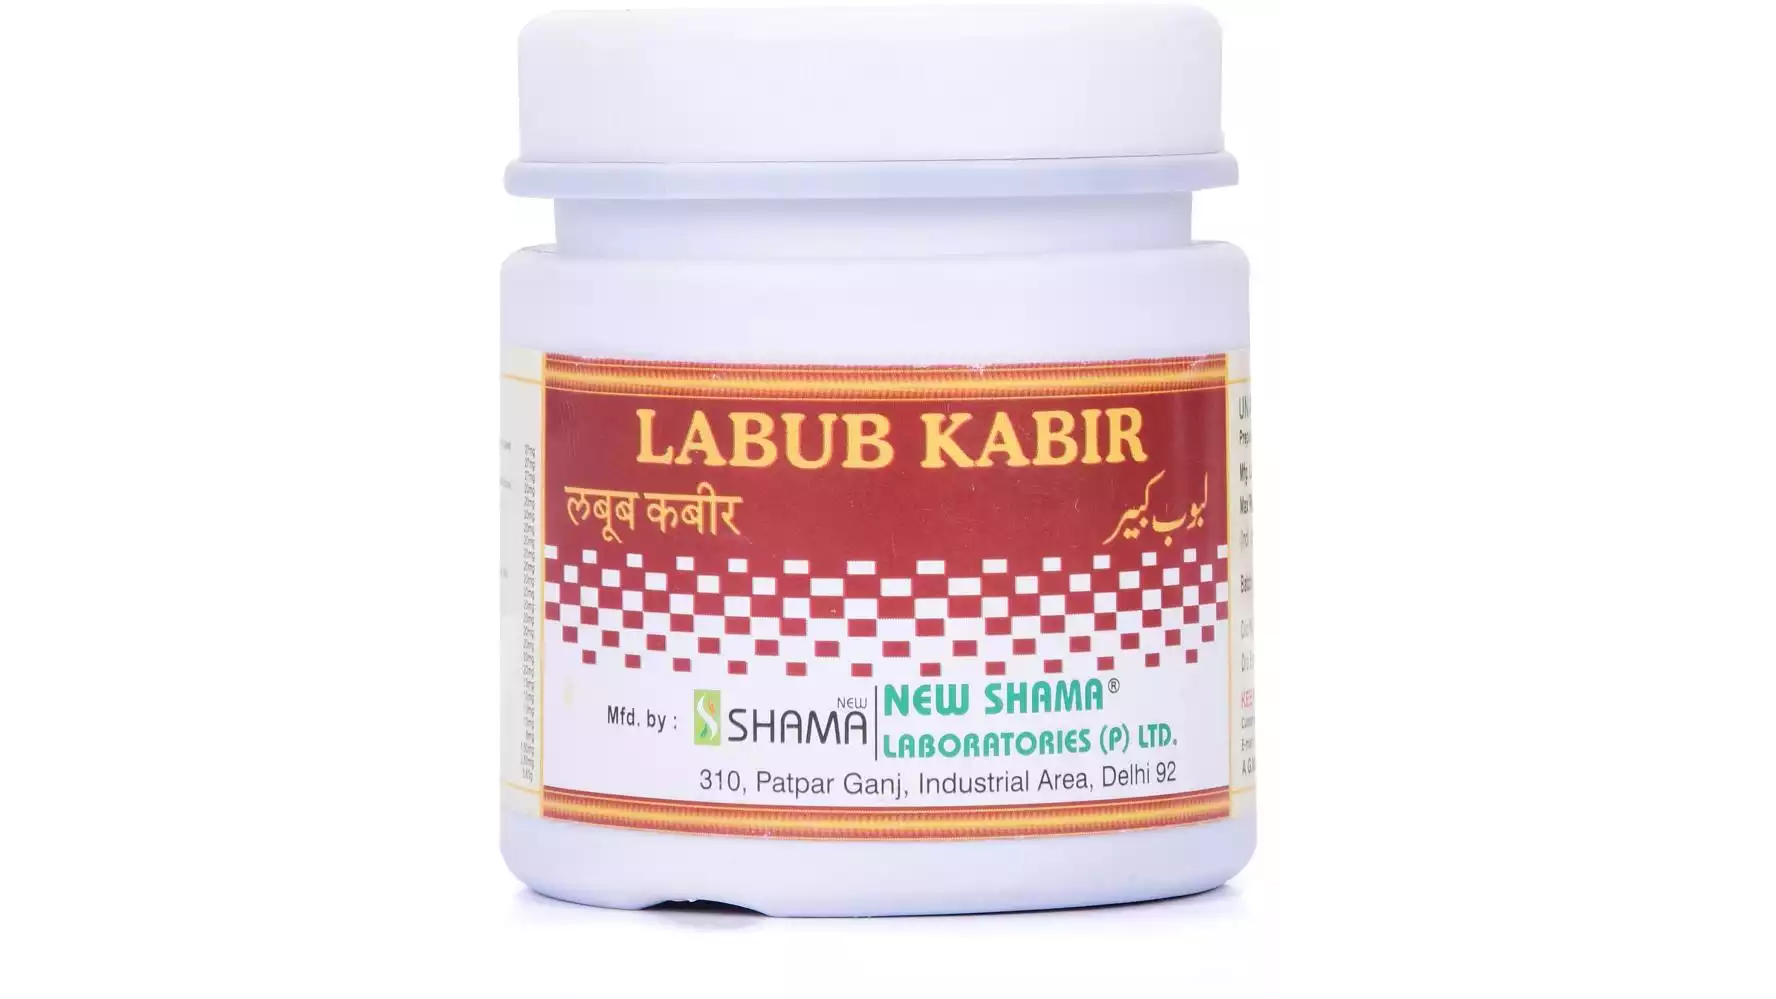 New Shama Labub Kabir (250g)